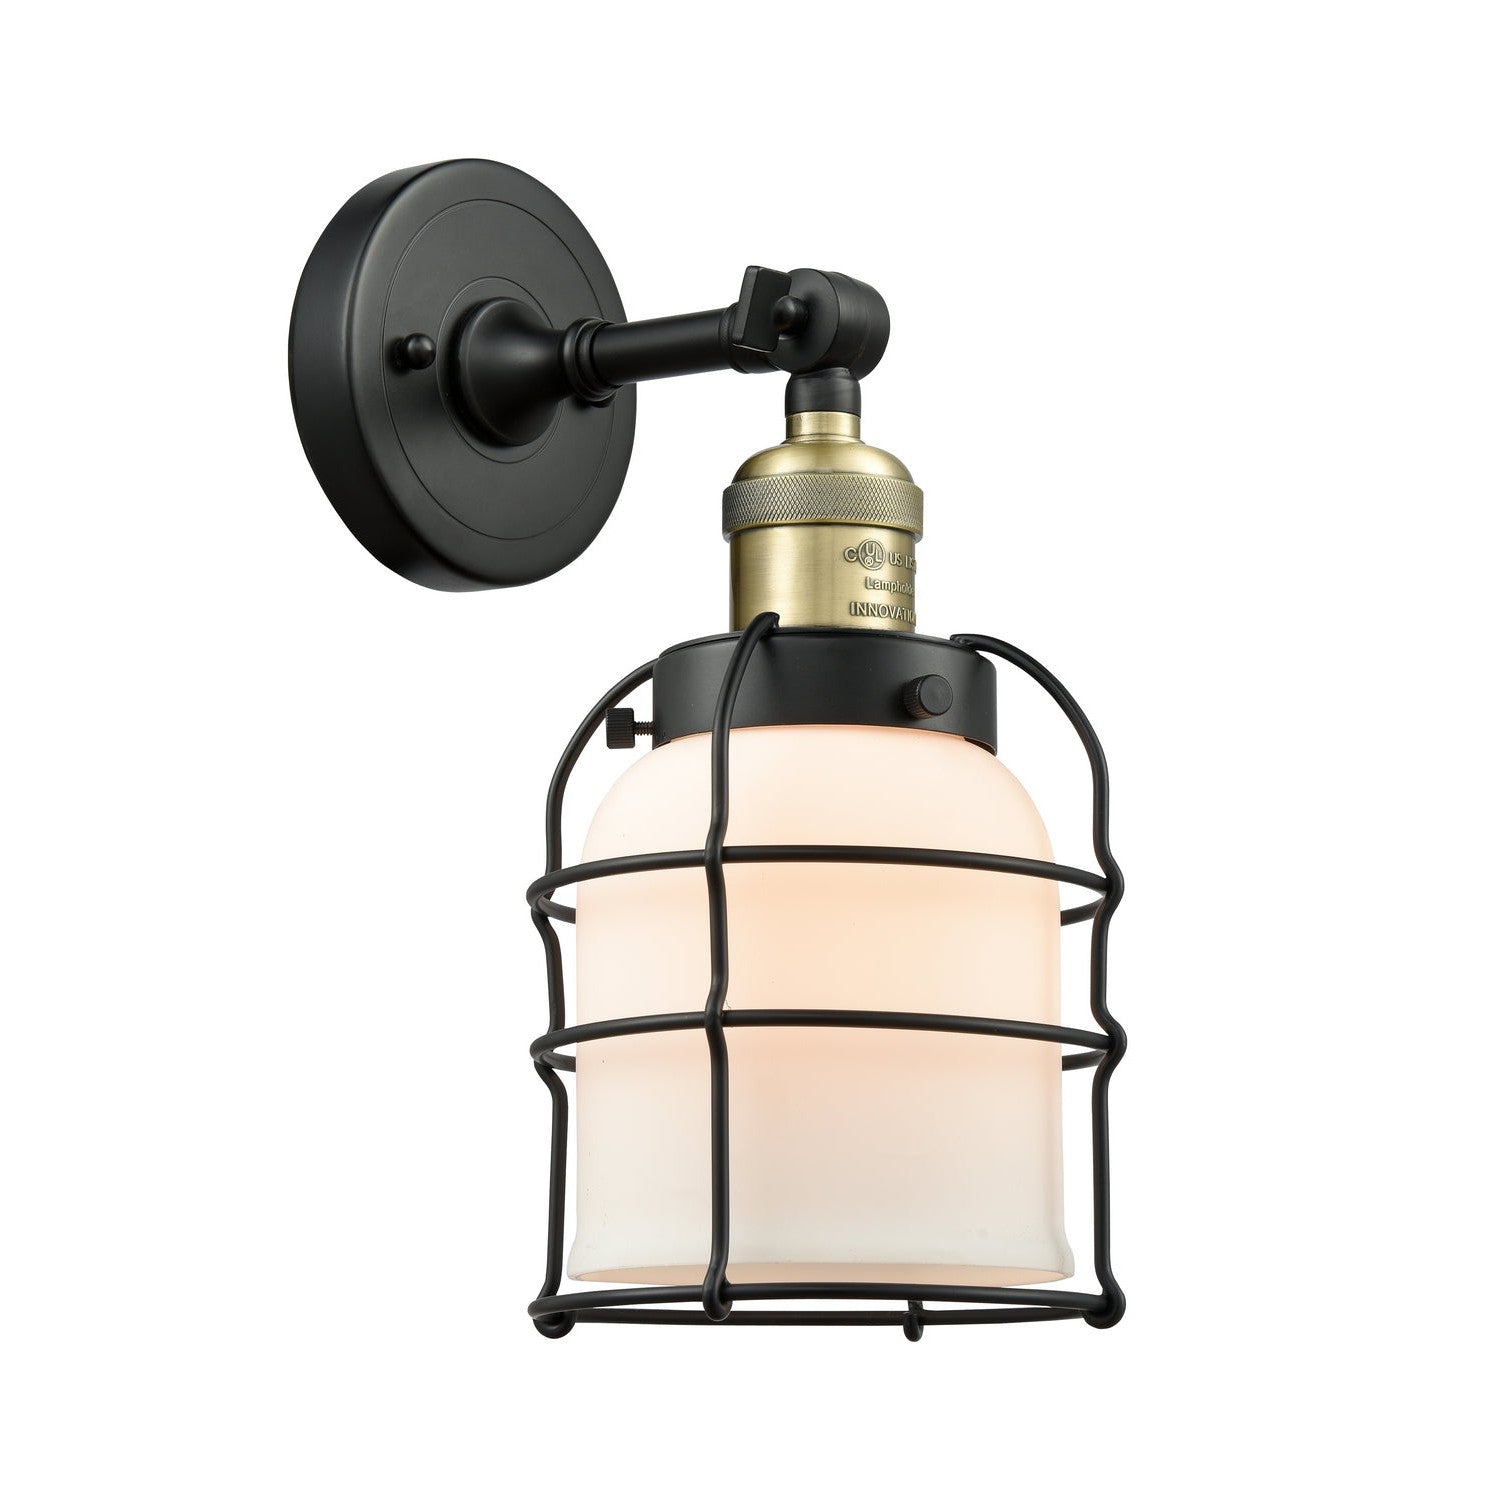 Innovations Franklin Restoration 203-BAB-G51-CE-LED Wall Sconce Light - Black Antique Brass